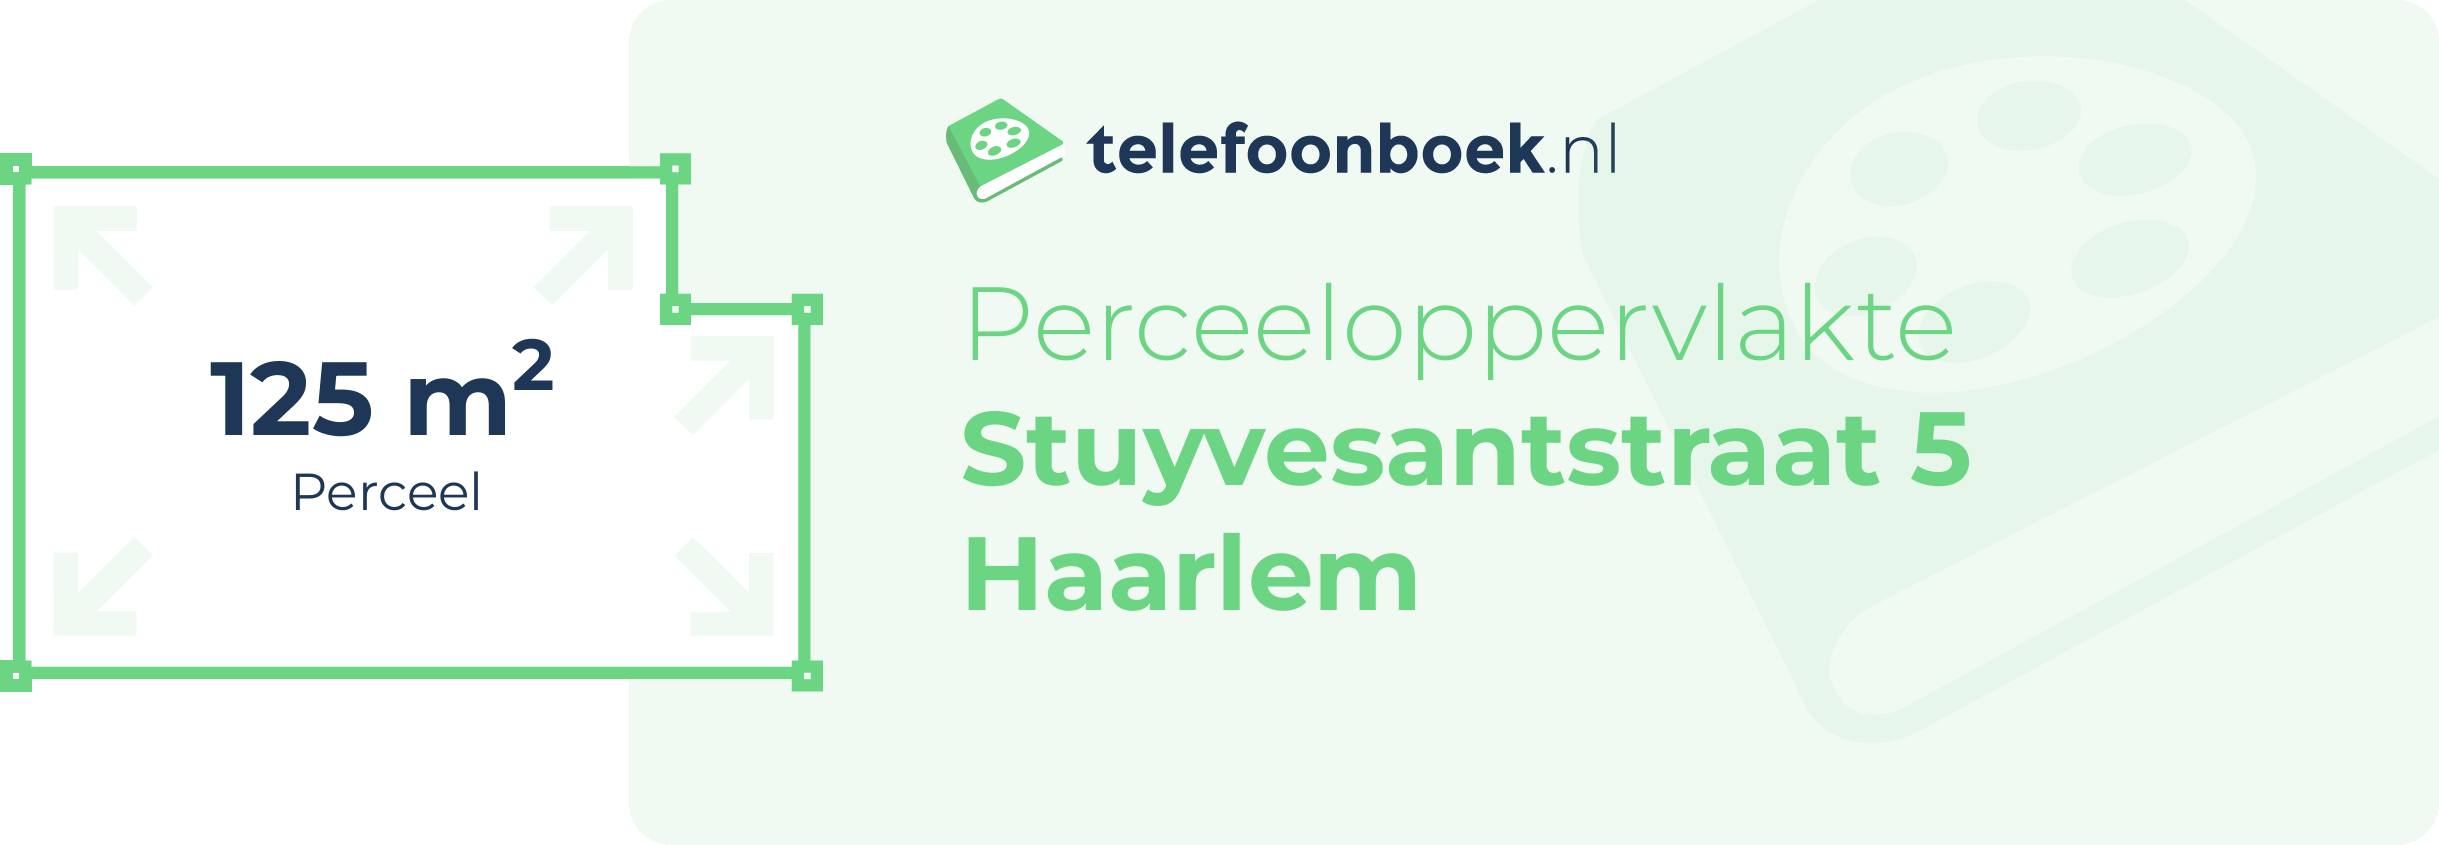 Perceeloppervlakte Stuyvesantstraat 5 Haarlem